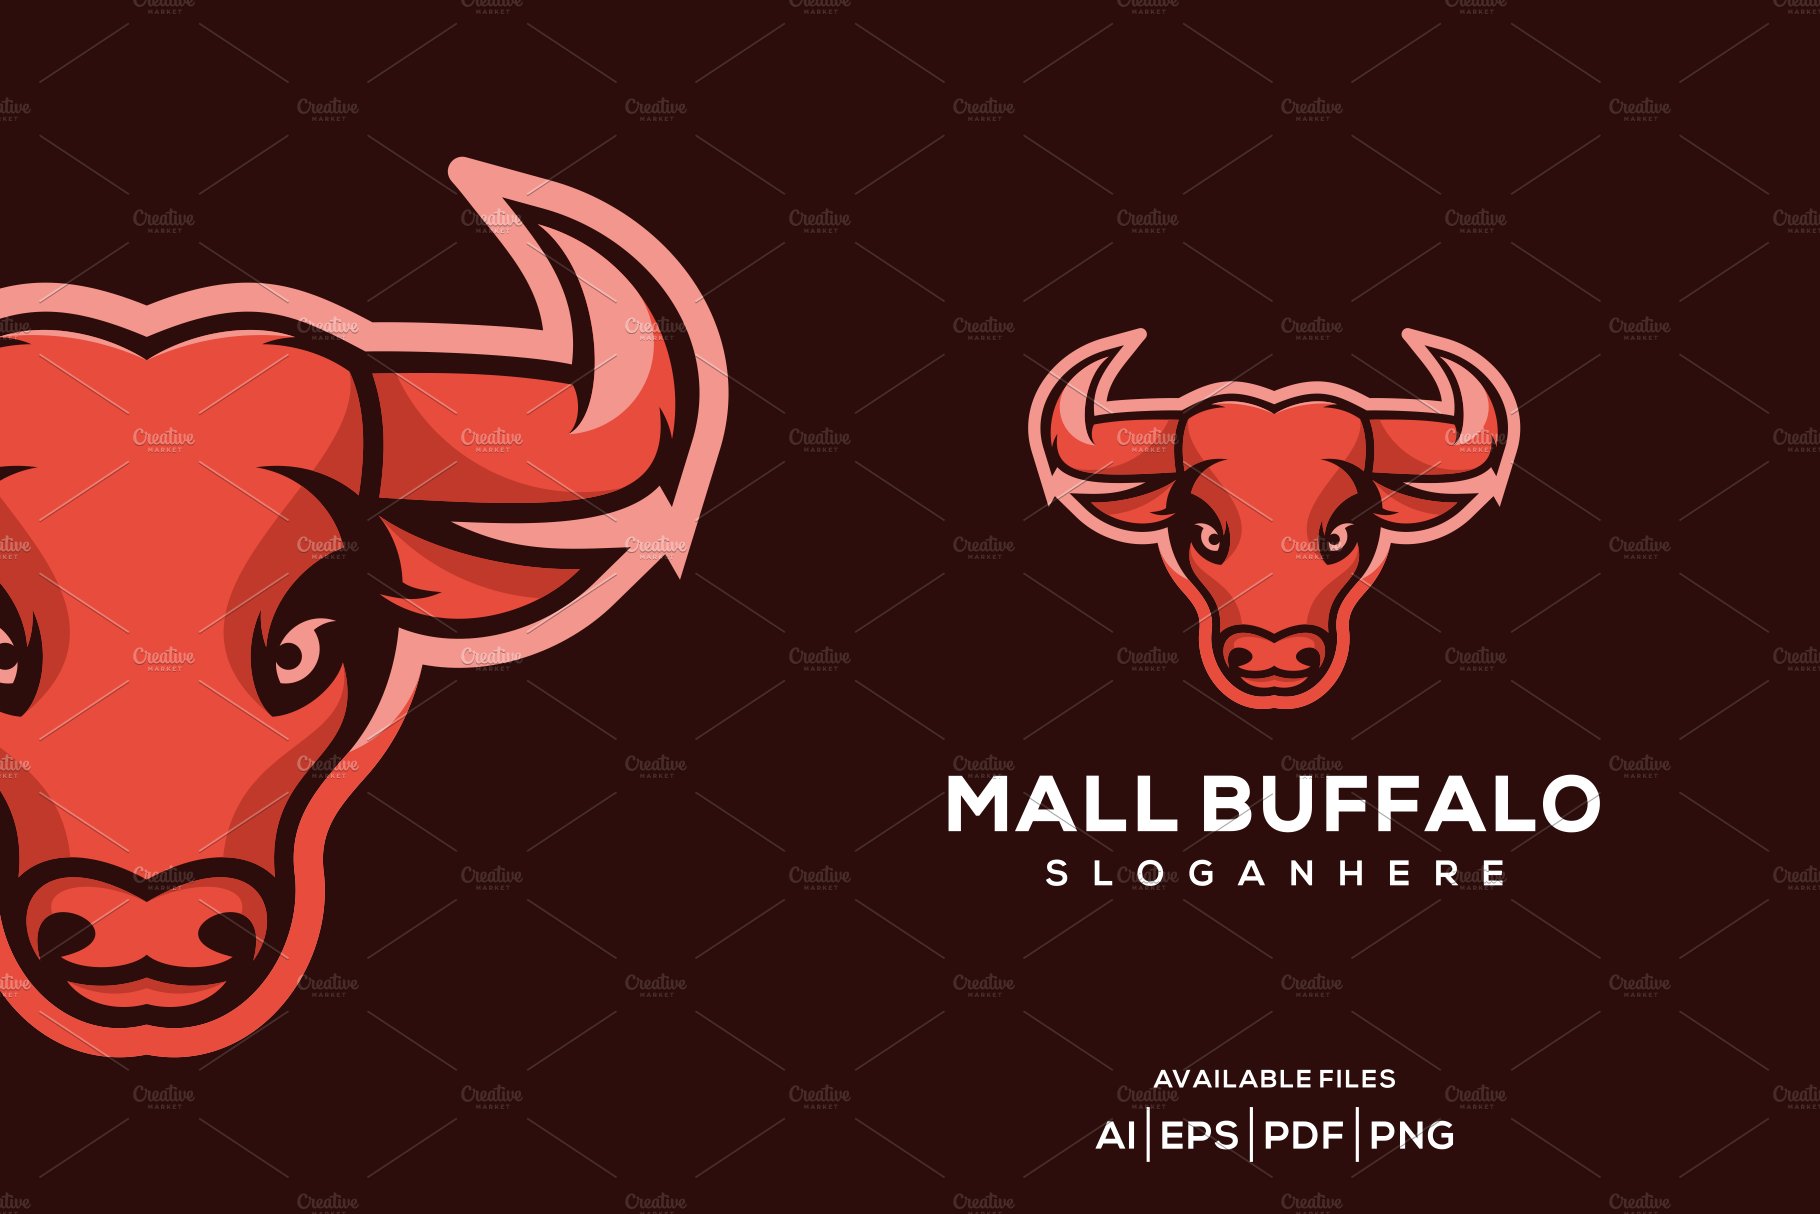 male buffalo mascot logo design cover image.